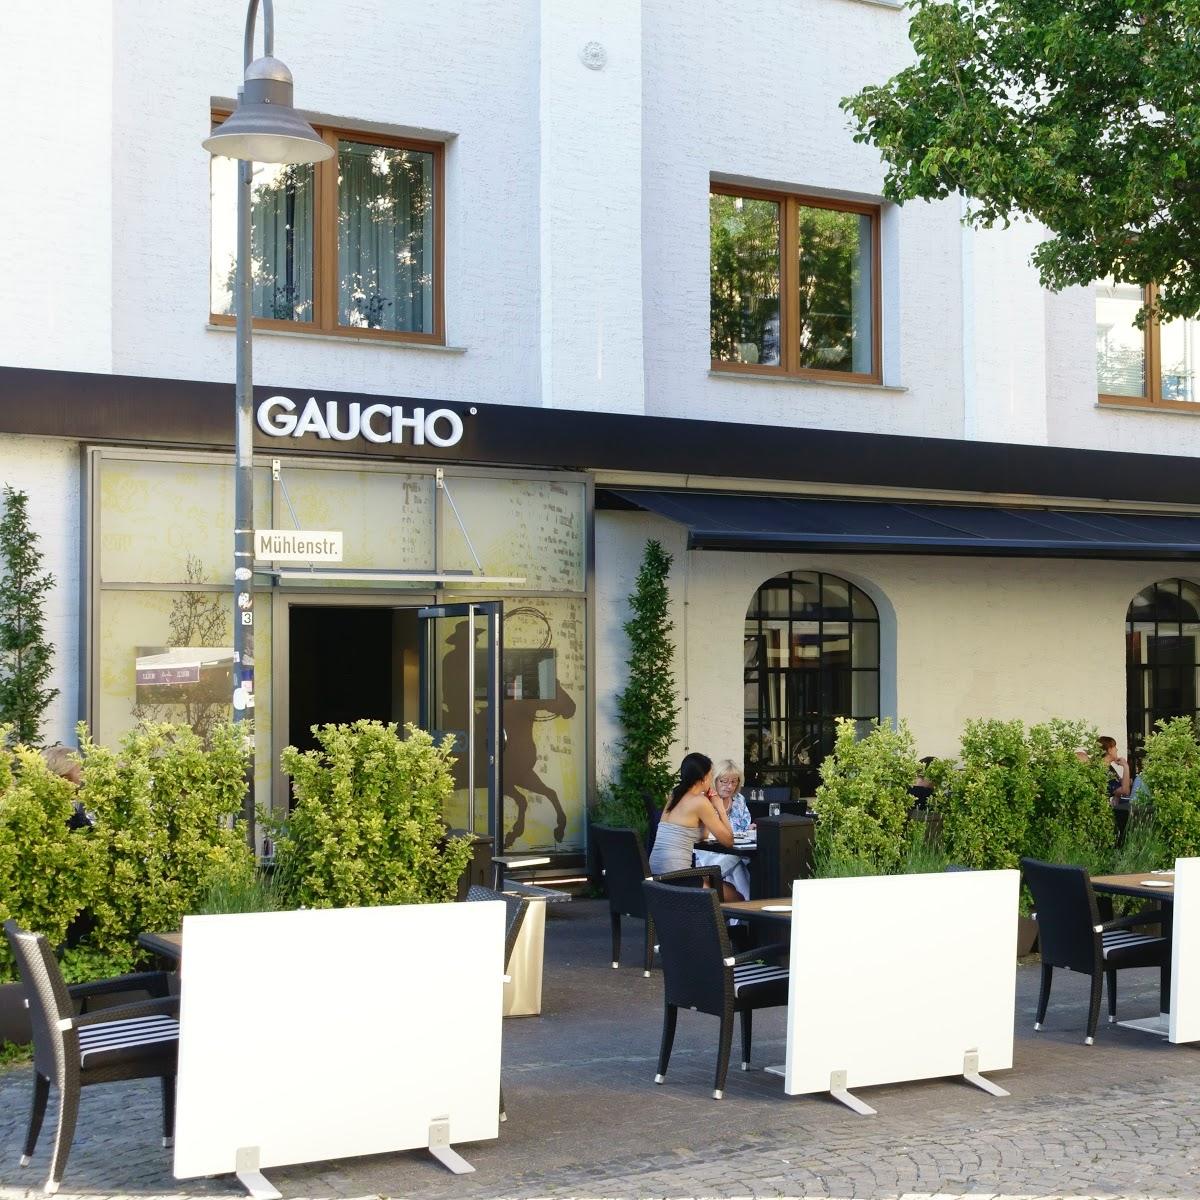 Restaurant "Gaucho" in  Paderborn